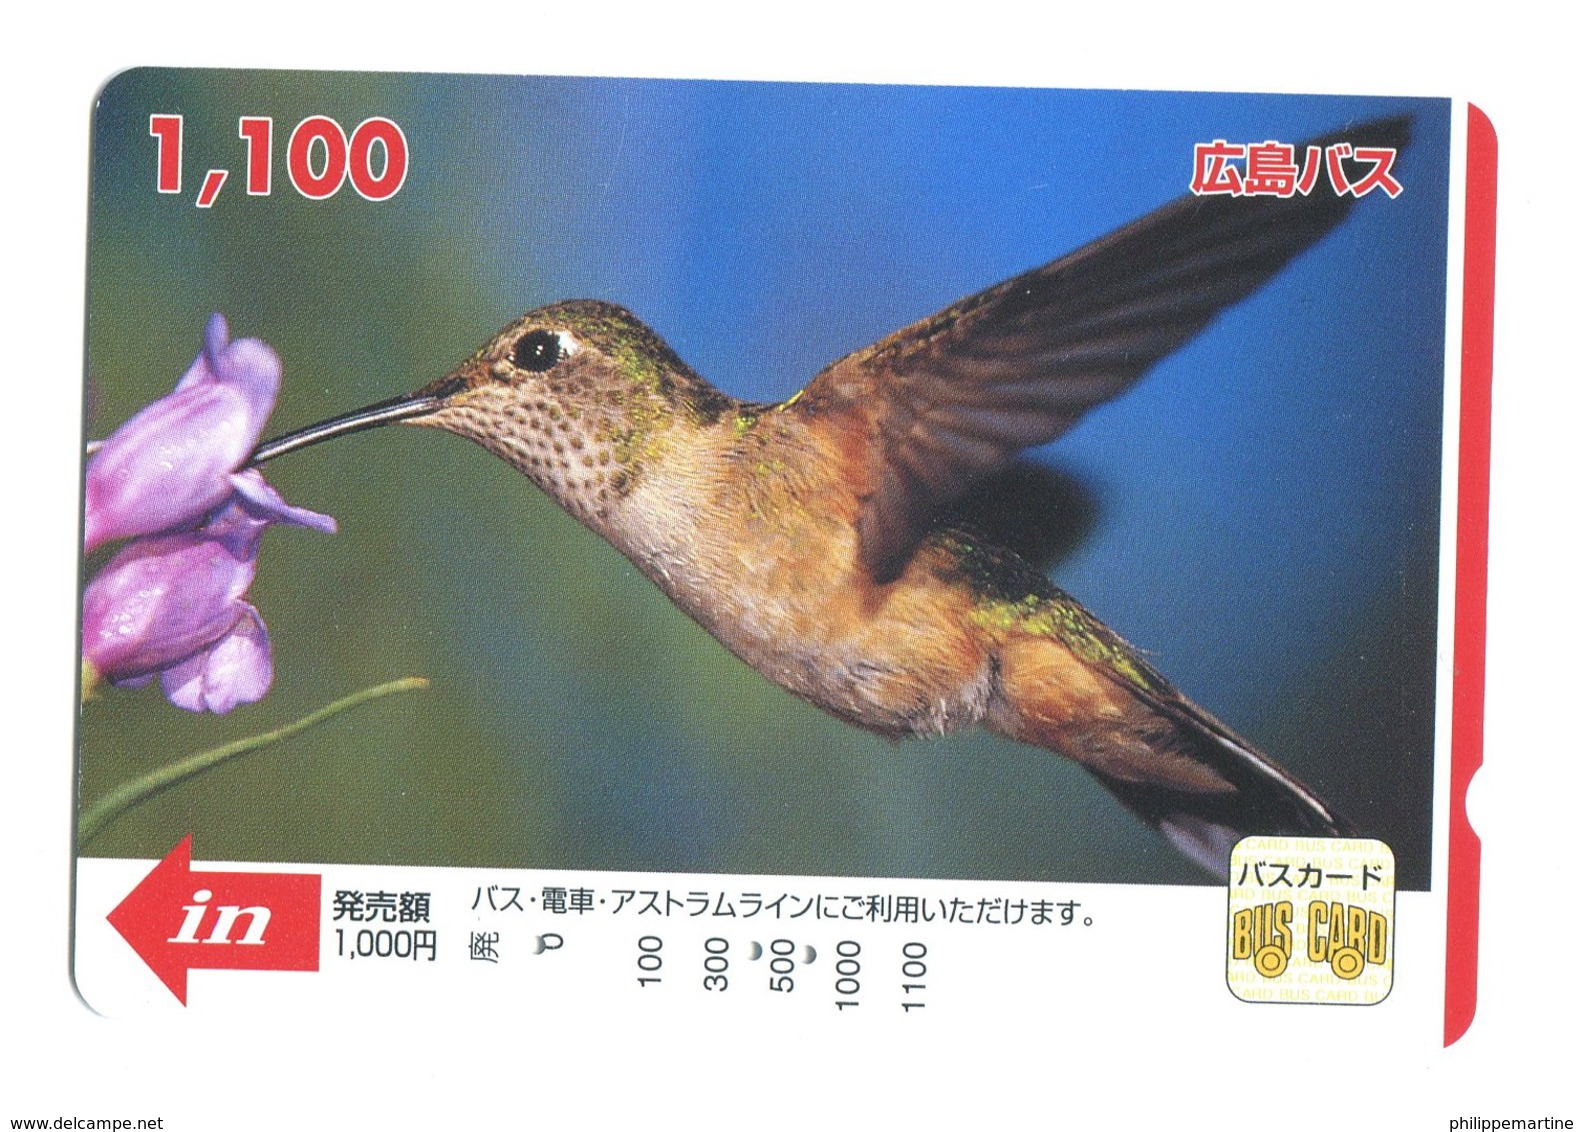 Japon - Bus Card : Colibri - Mundo